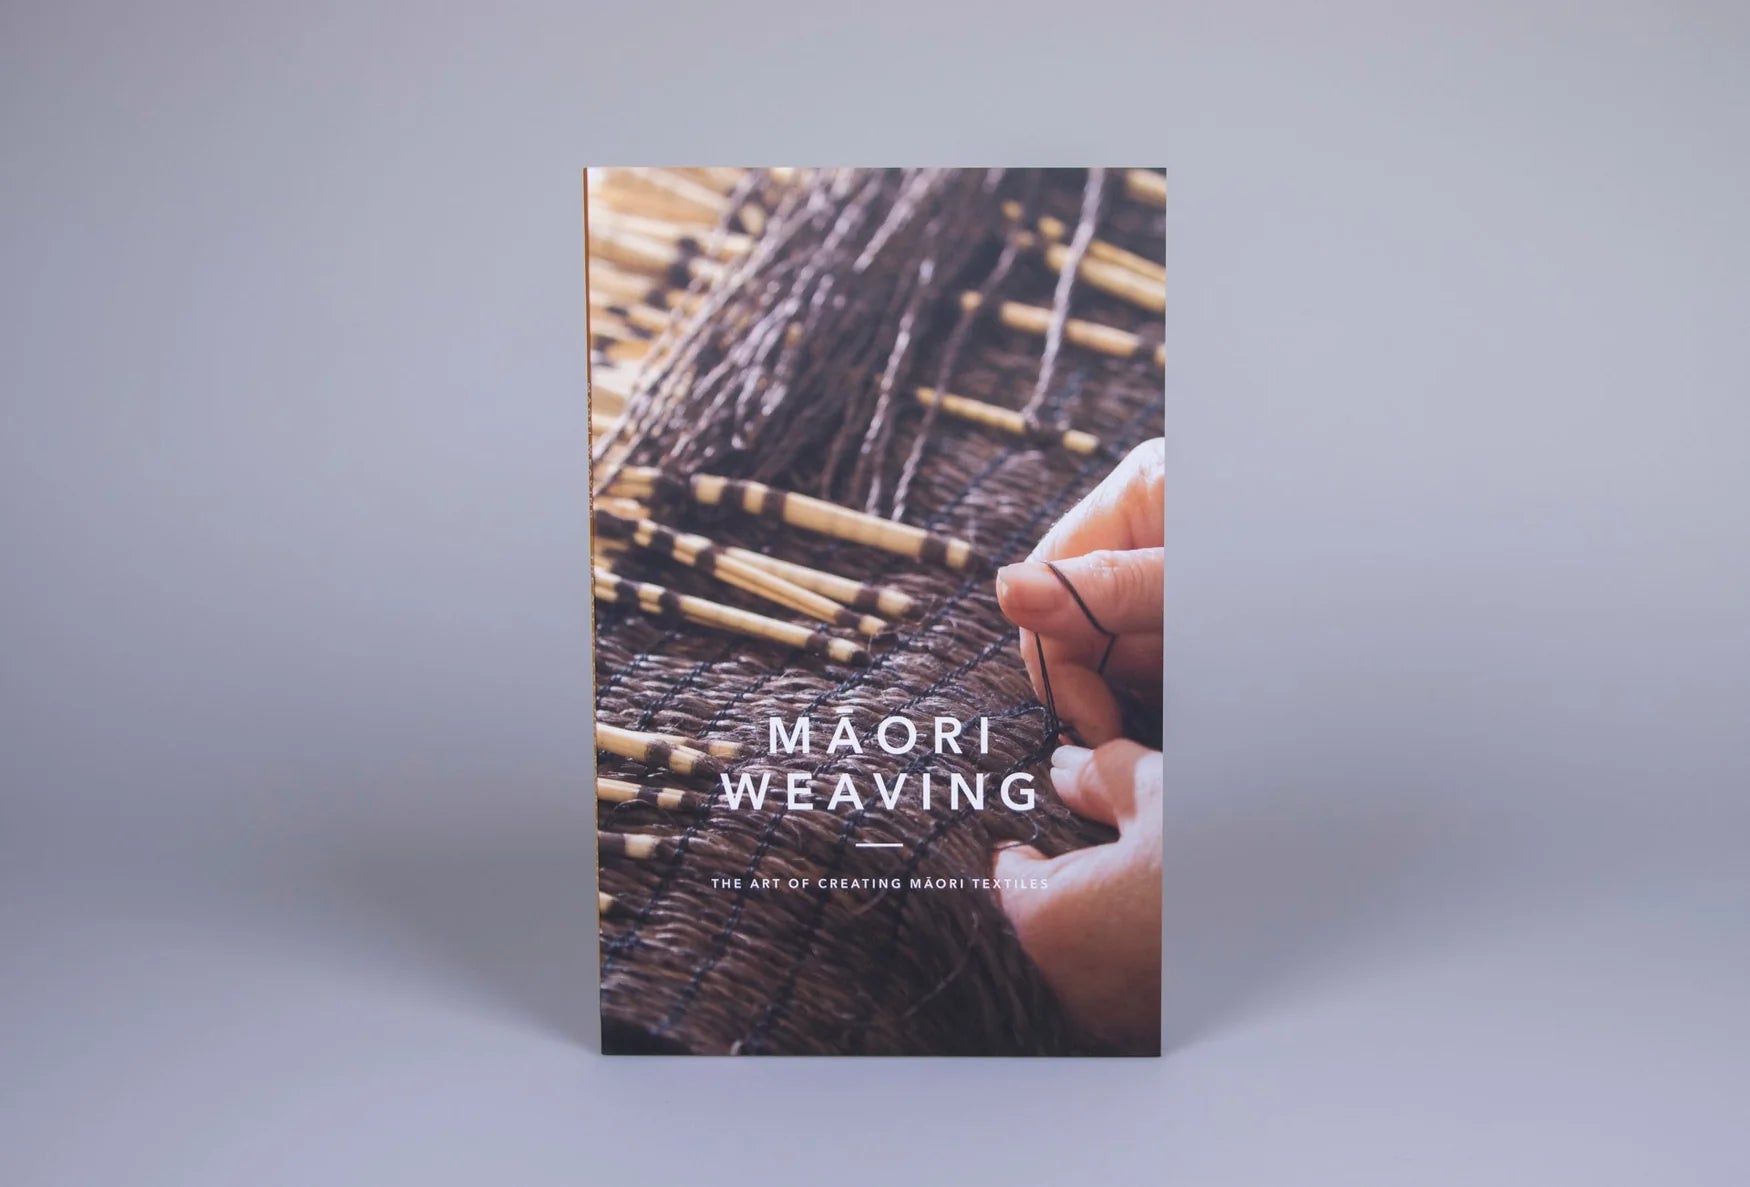 Māori Weaving: The Art of Creating Māori Textiles from Ngā Kete Iho & Huia Publishers